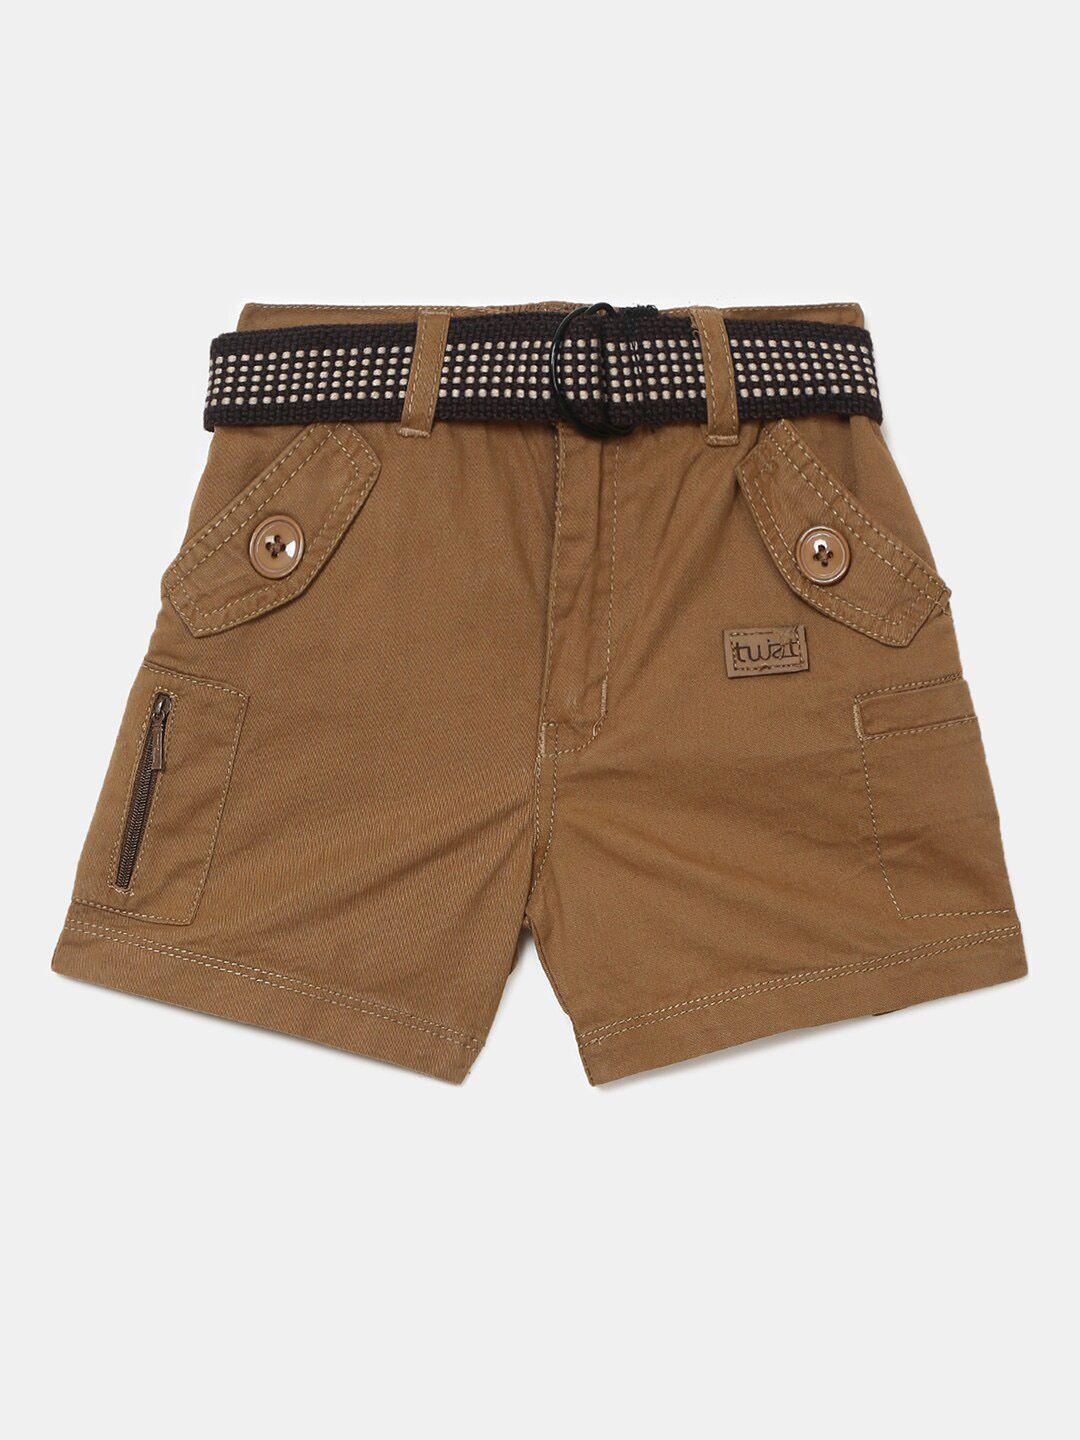 v-mart boys khaki outdoor cotton shorts